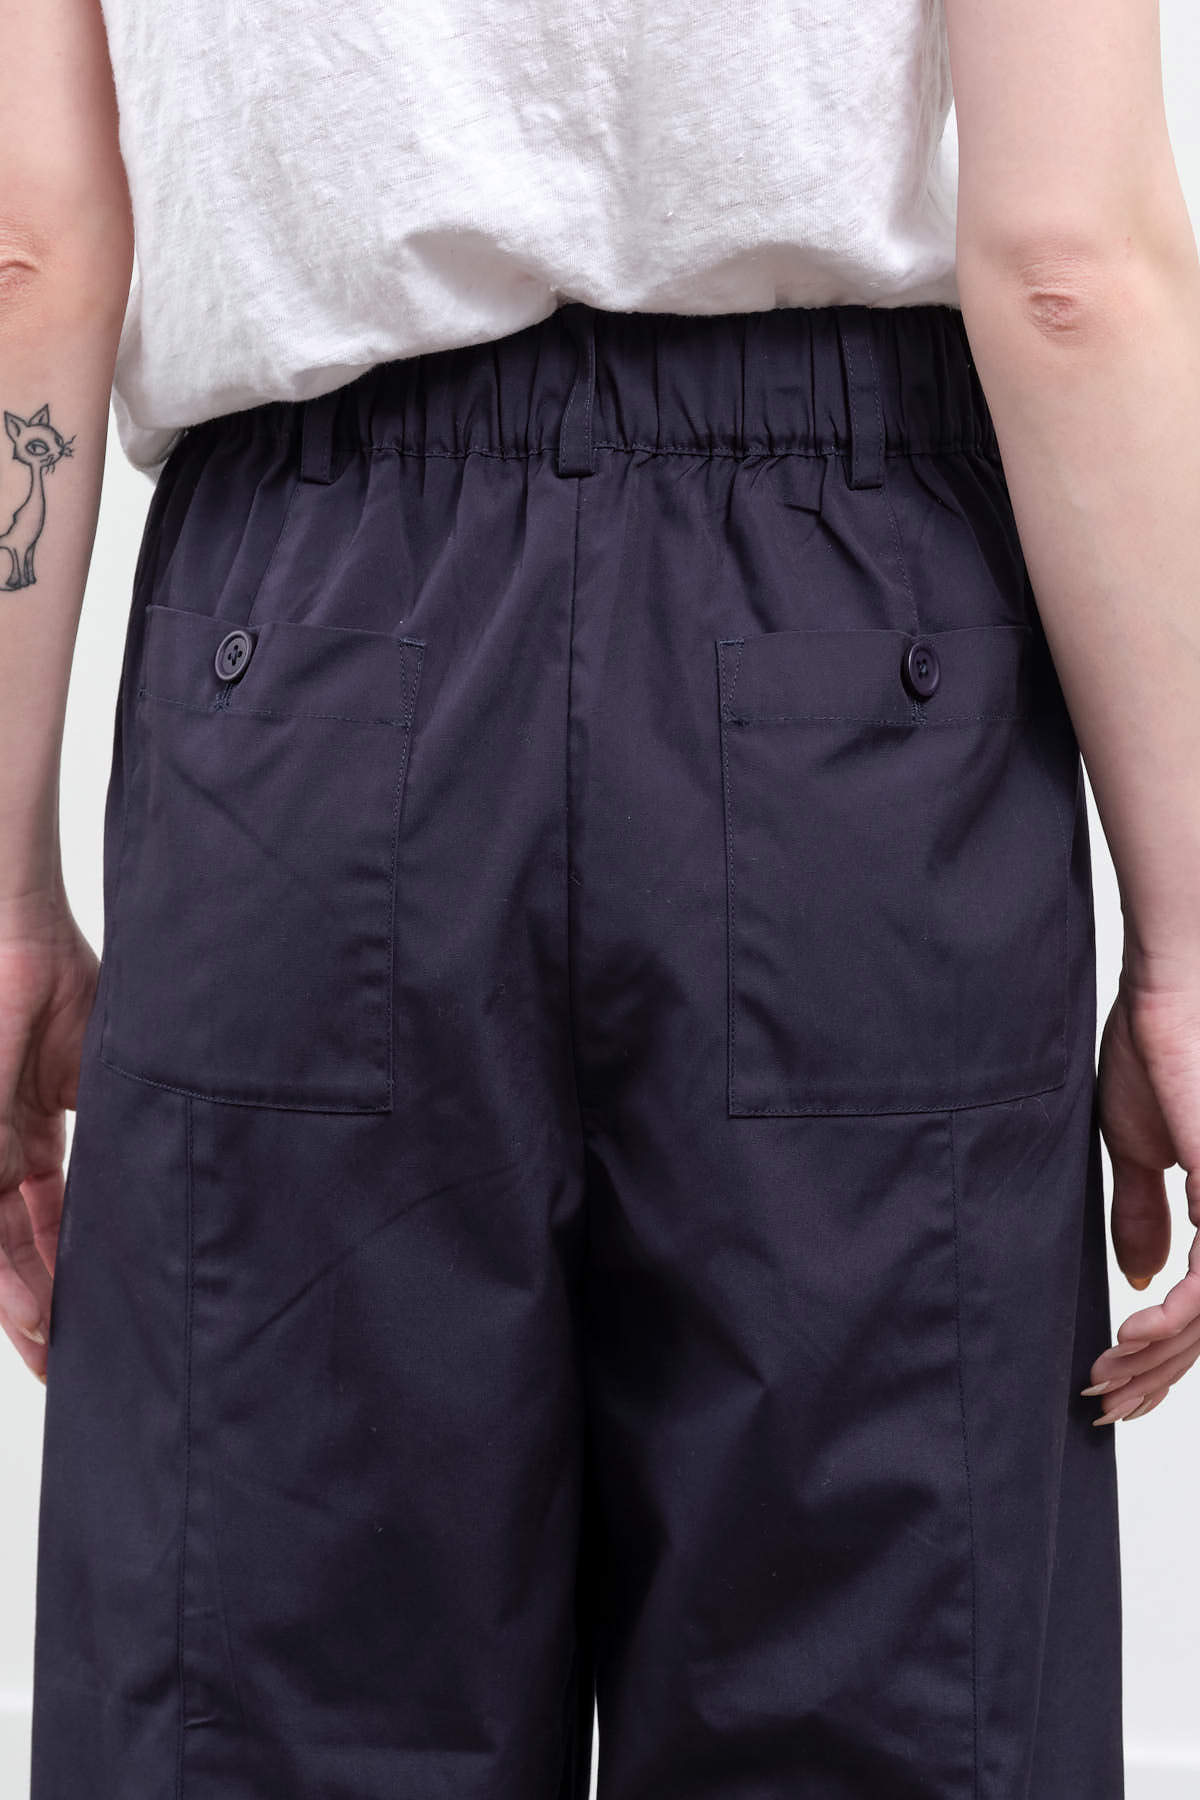 Rear pocket view of Elastic Straight-Legged Trouser